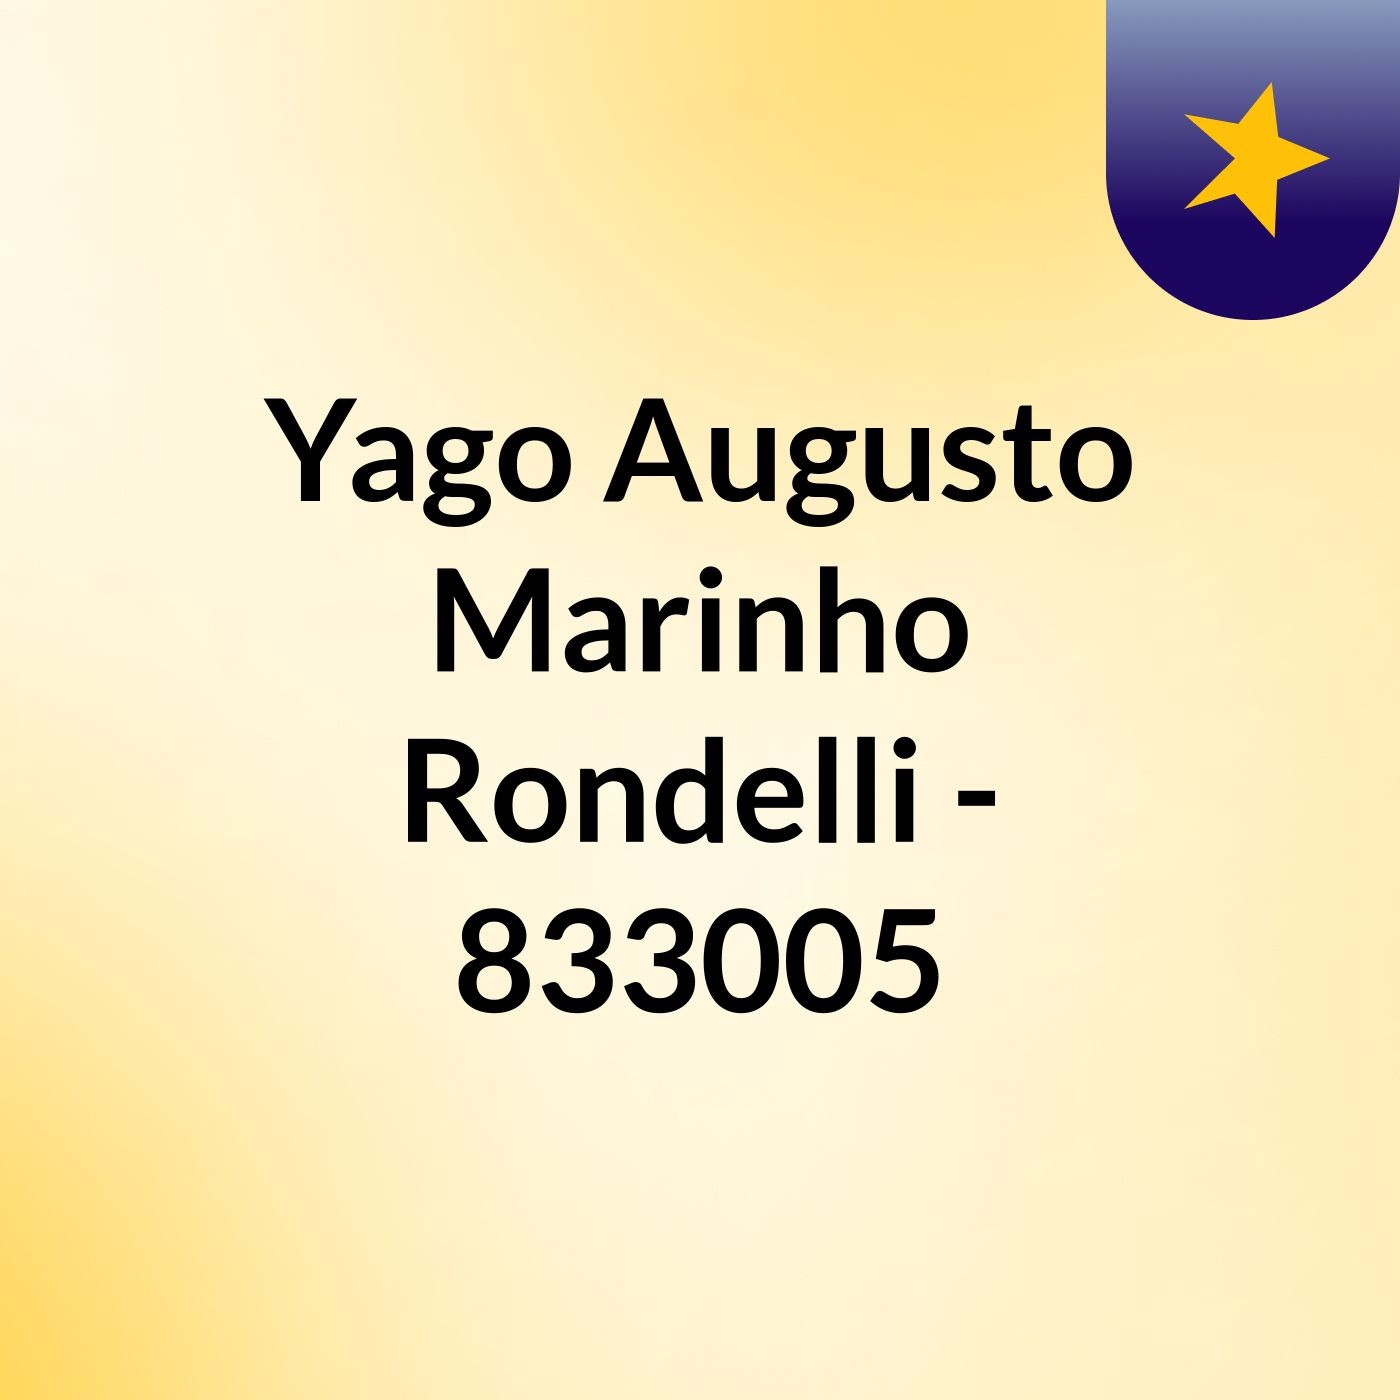 Yago Augusto Marinho Rondelli - 833005